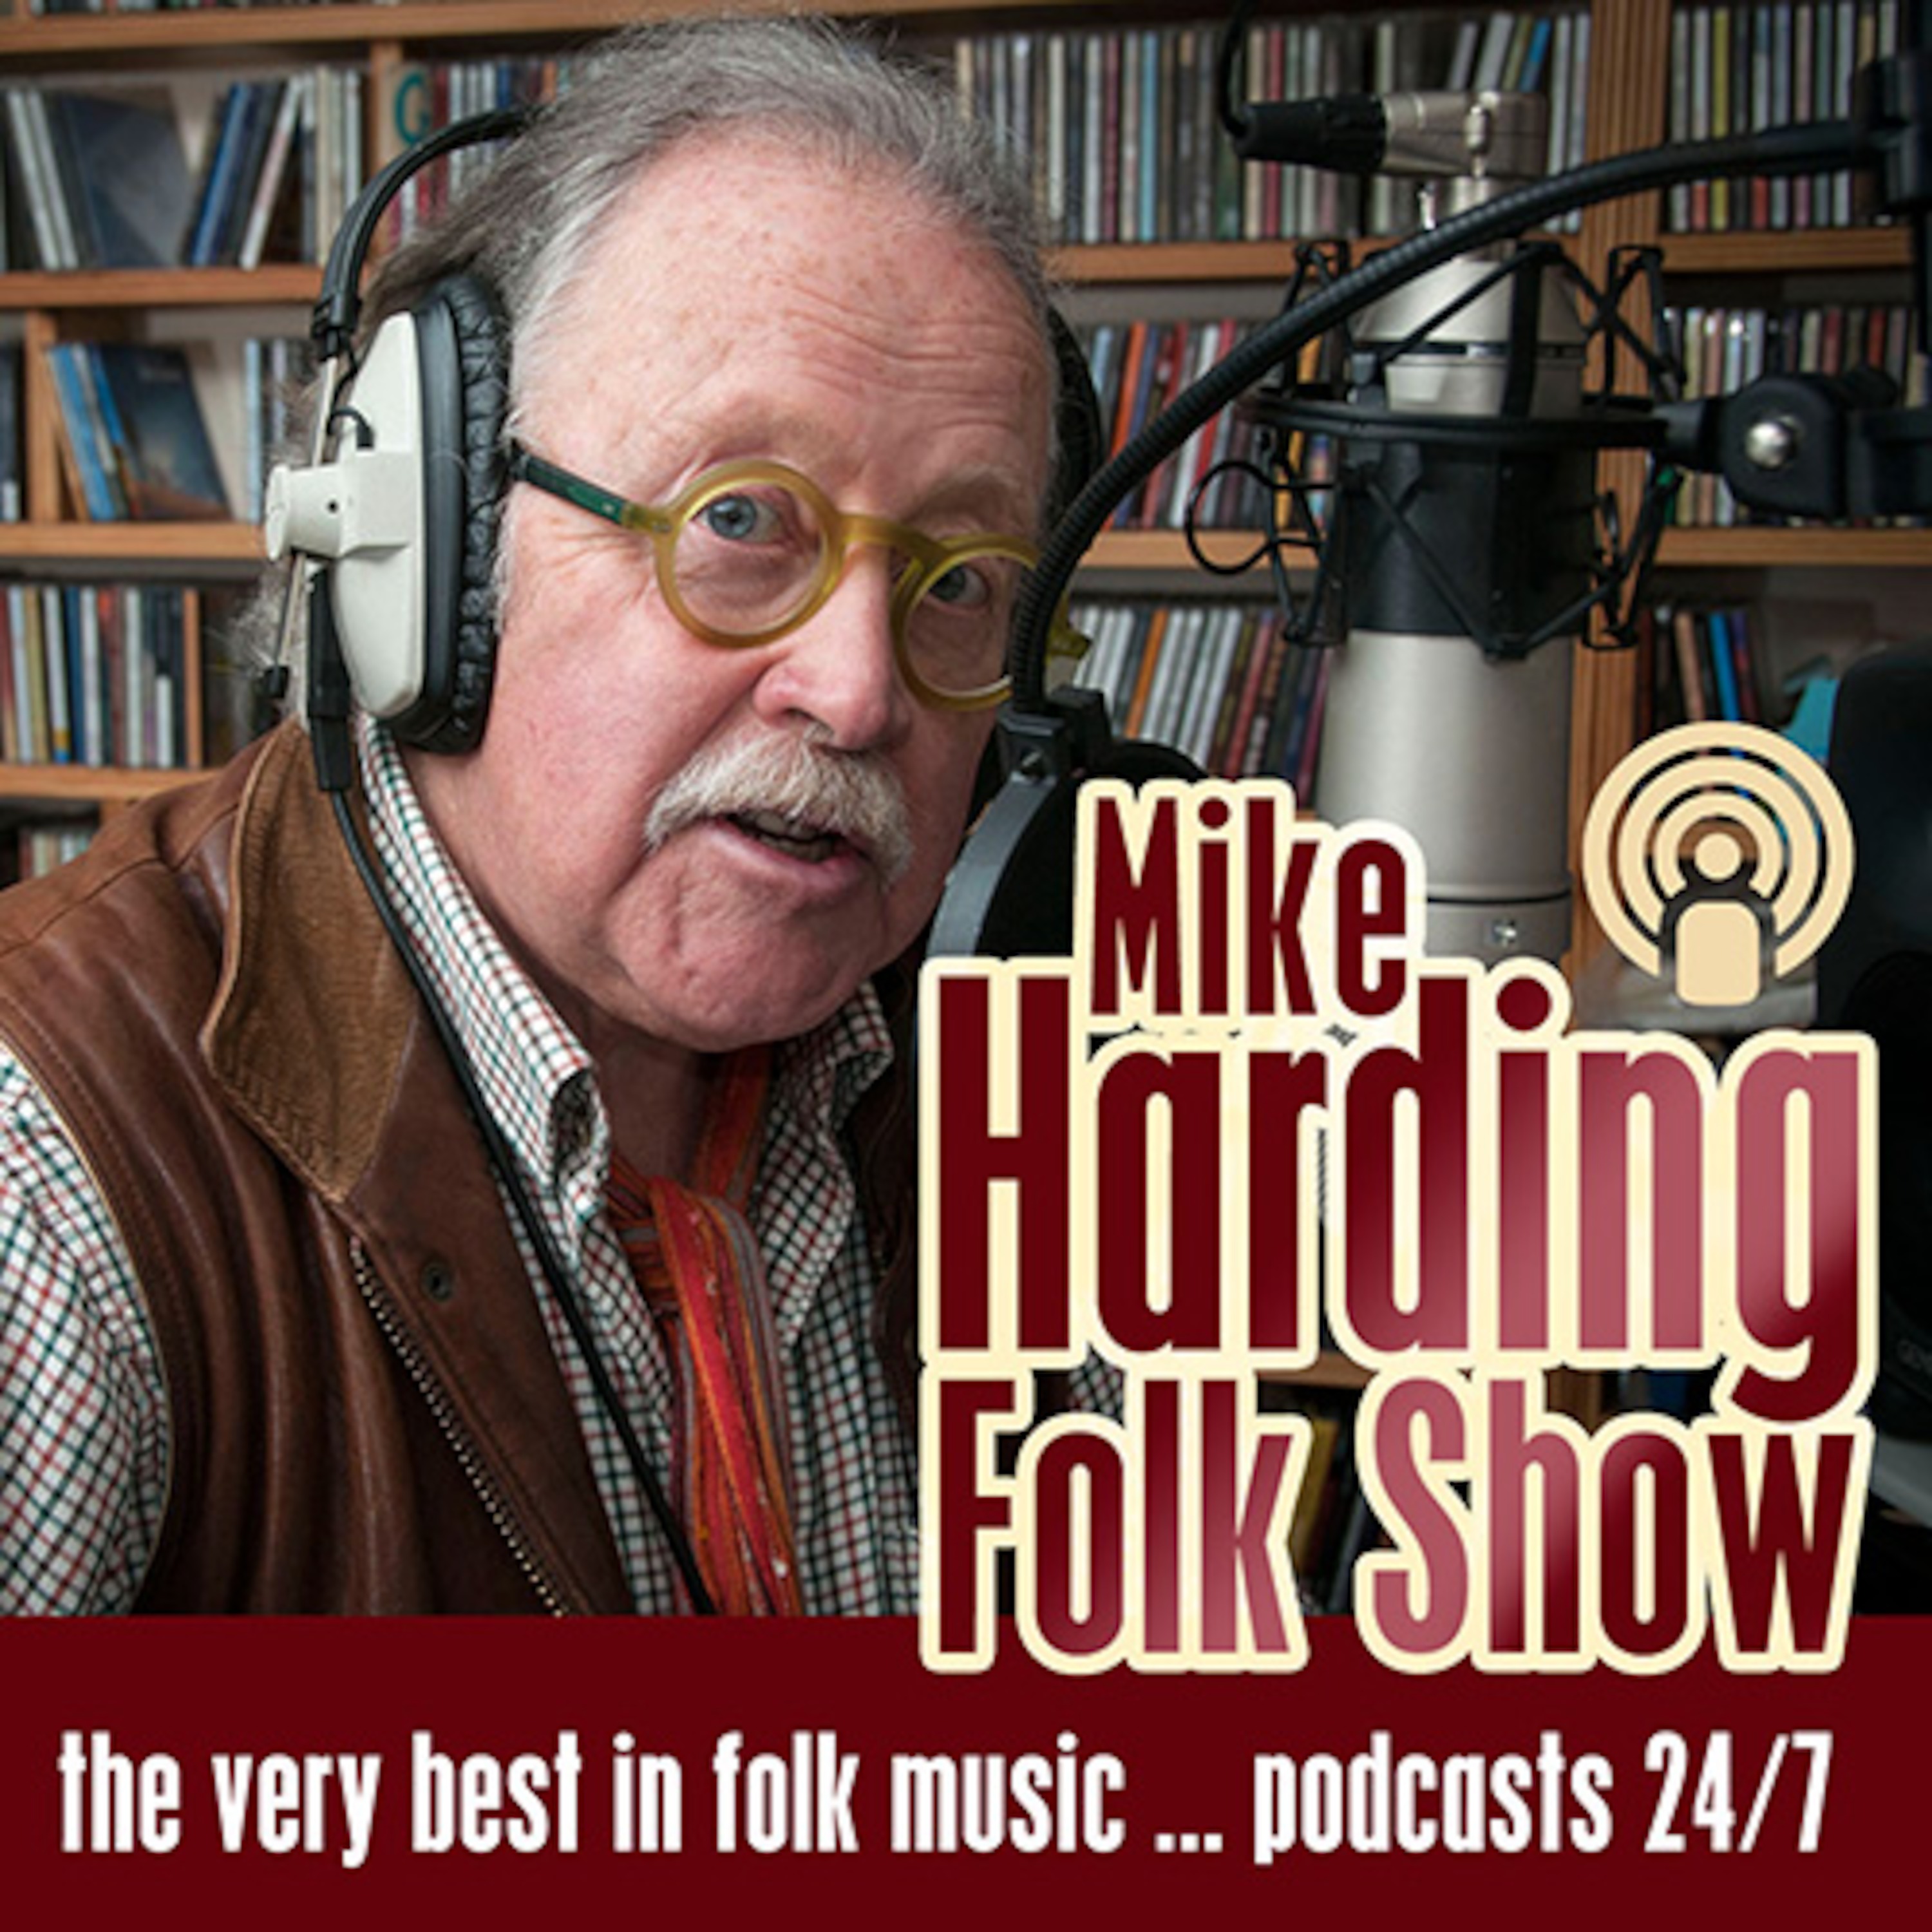 Mike Harding Folk Show 09